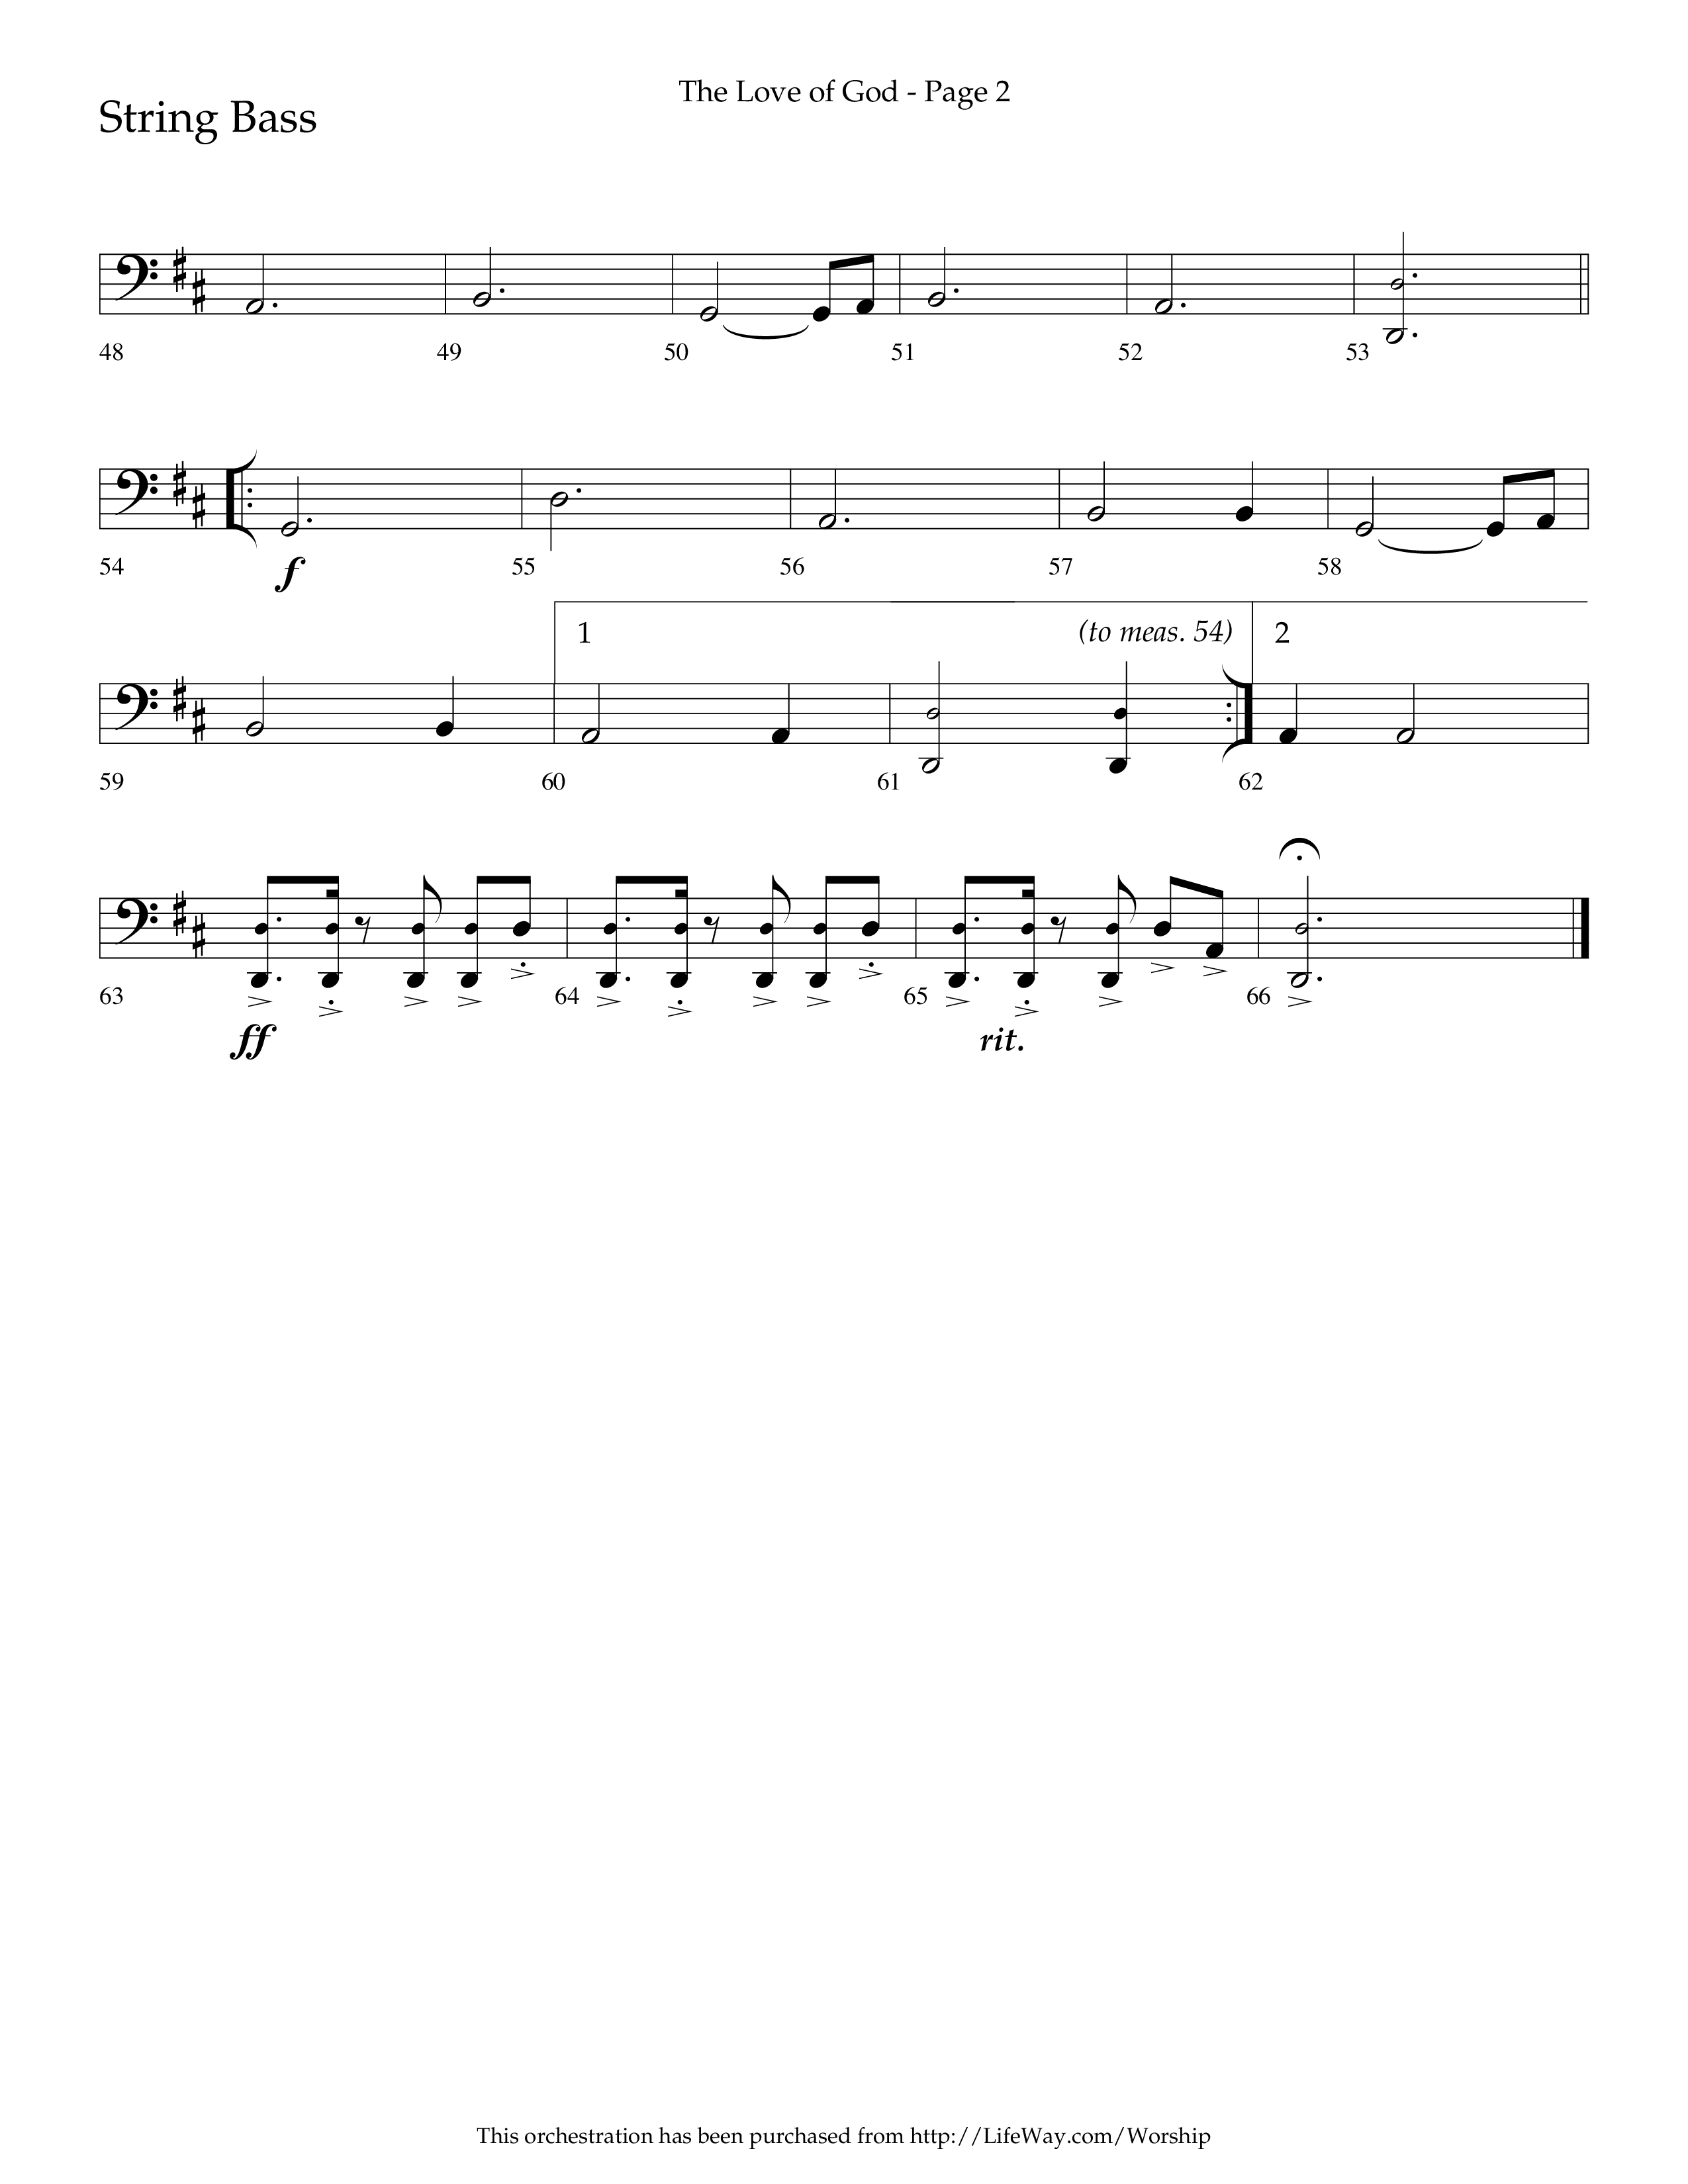 The Love of God (Choral Anthem SATB) String Bass (Arr. Charlie Sinclair / Orch. Scott Harris / Lifeway Choral)